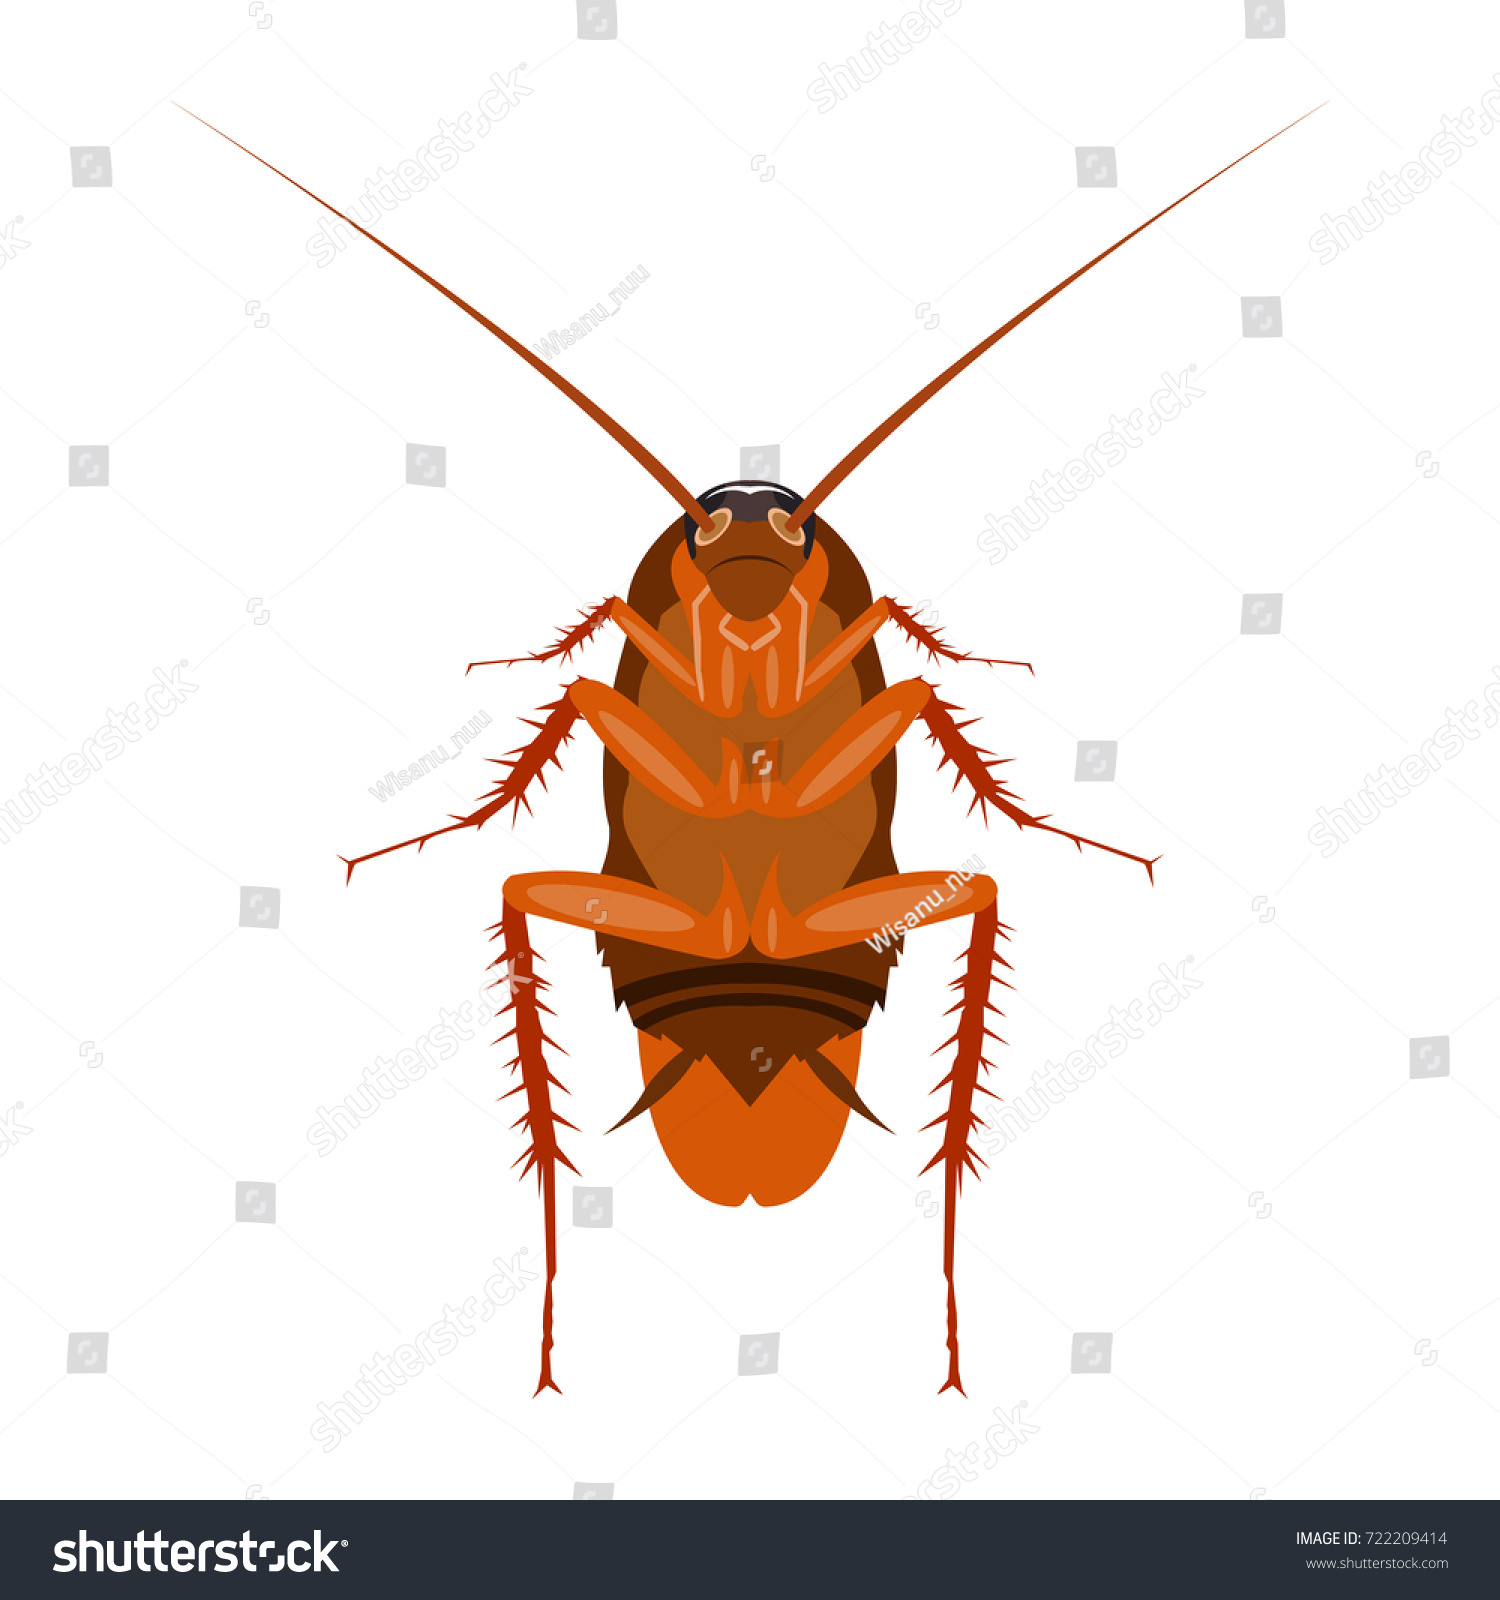 Close Cockroach Image Cartoon Flatstyle Vector Stock Vector ...